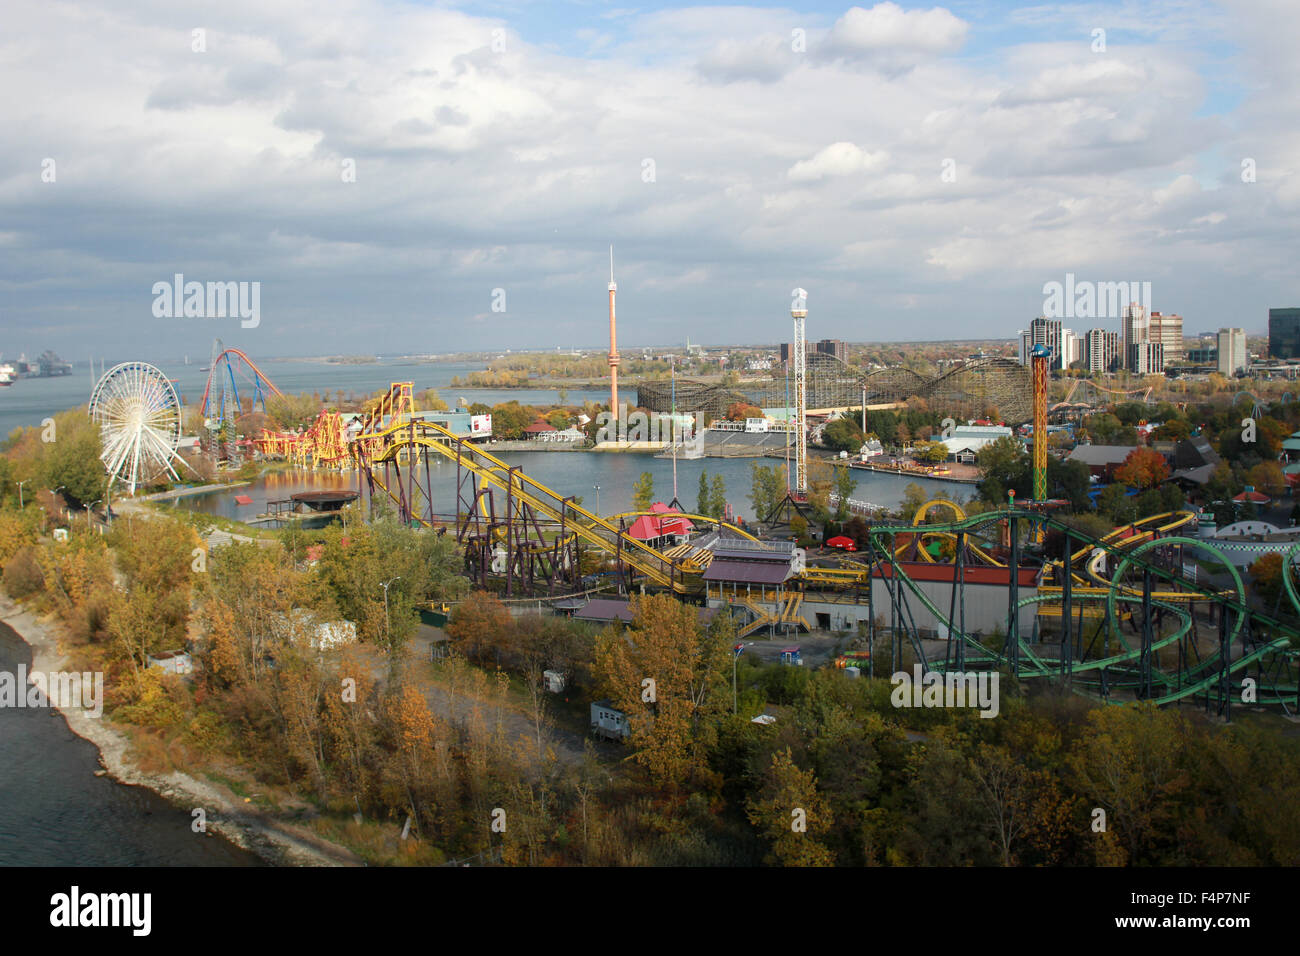 La Ronde Amusement park In Montreal, Quebec. Stock Photo